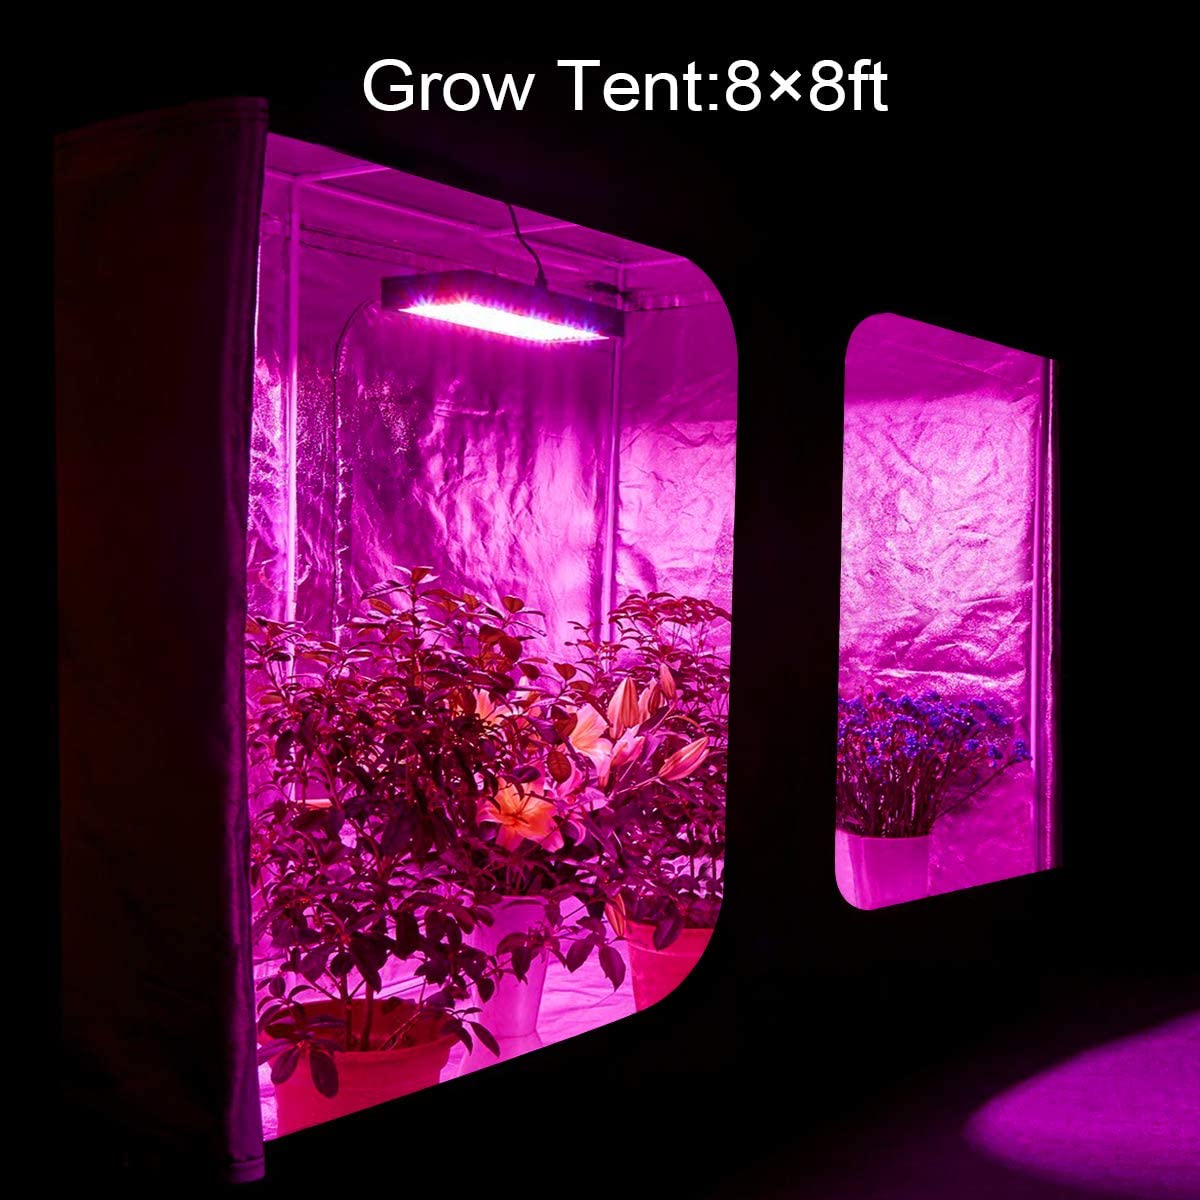 BESTVA, BESTVA 4000W Double Chips LED Grow Light Full Spectrum 12 Band Grown Lamp for Greenhouse Hydroponic Indoor Veg and Flower New